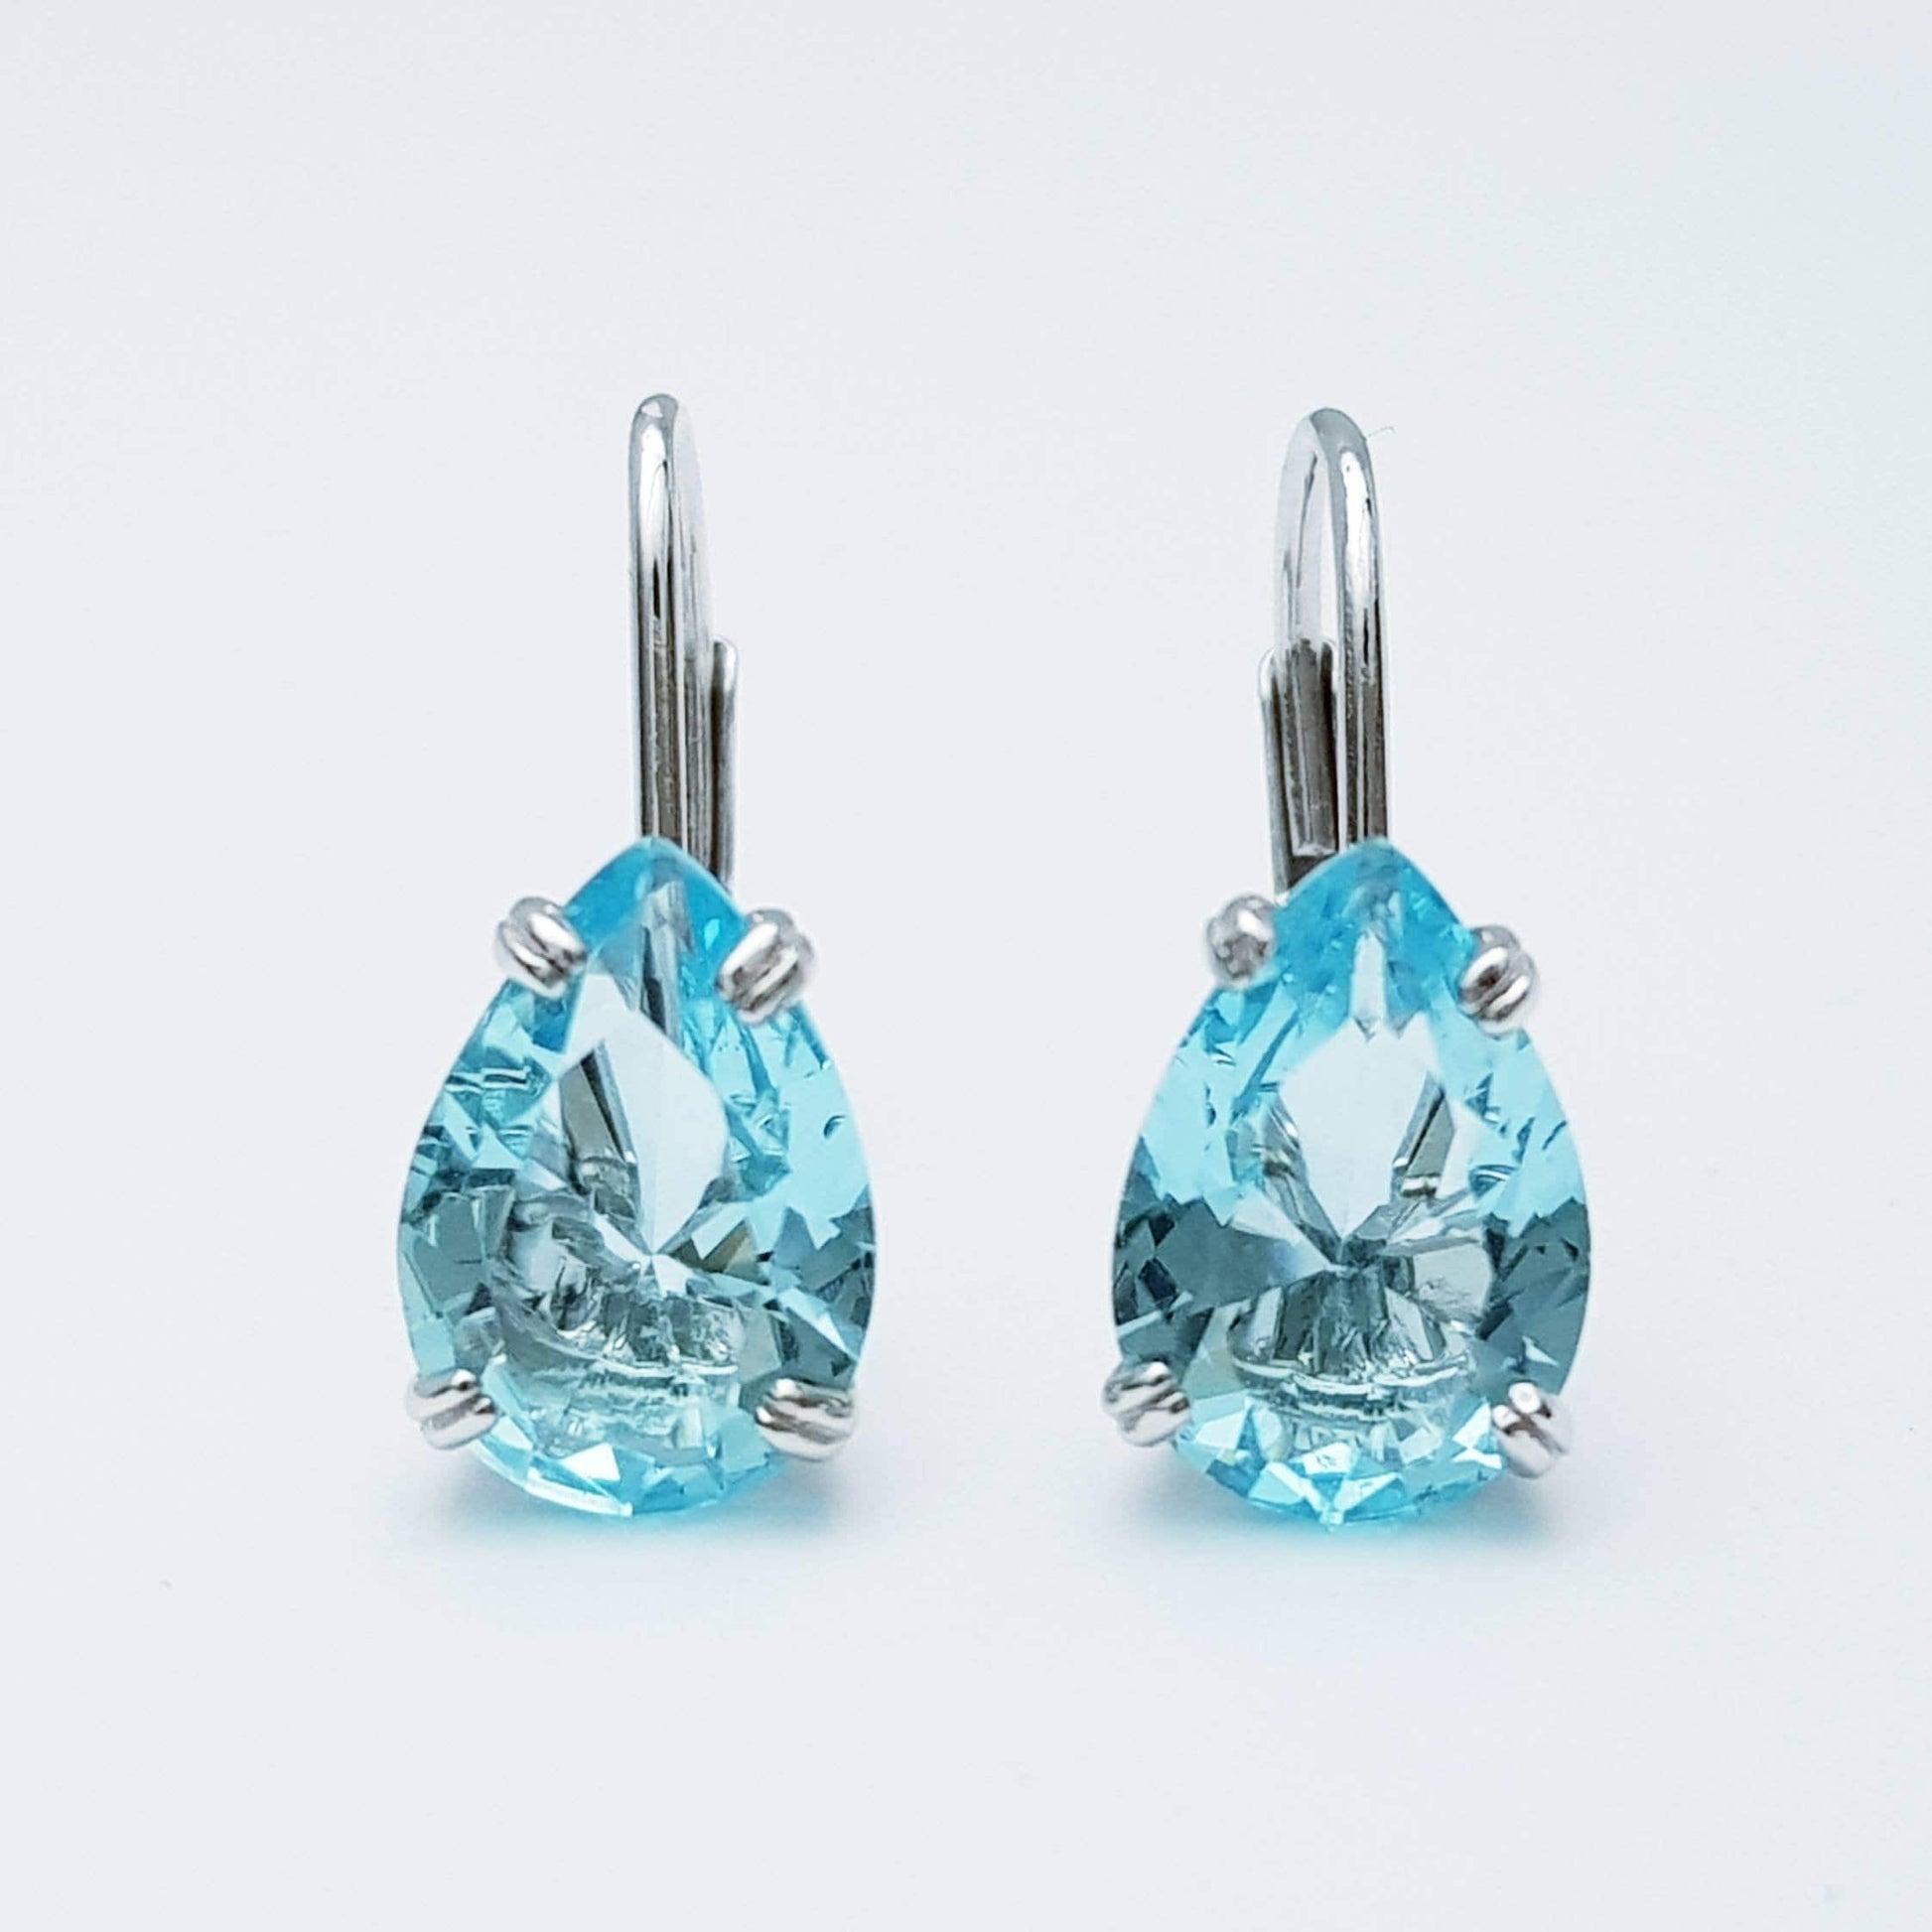 Sparkling turquoise blue silver lever back earrings, teardrop leverback earrings, March birthstone